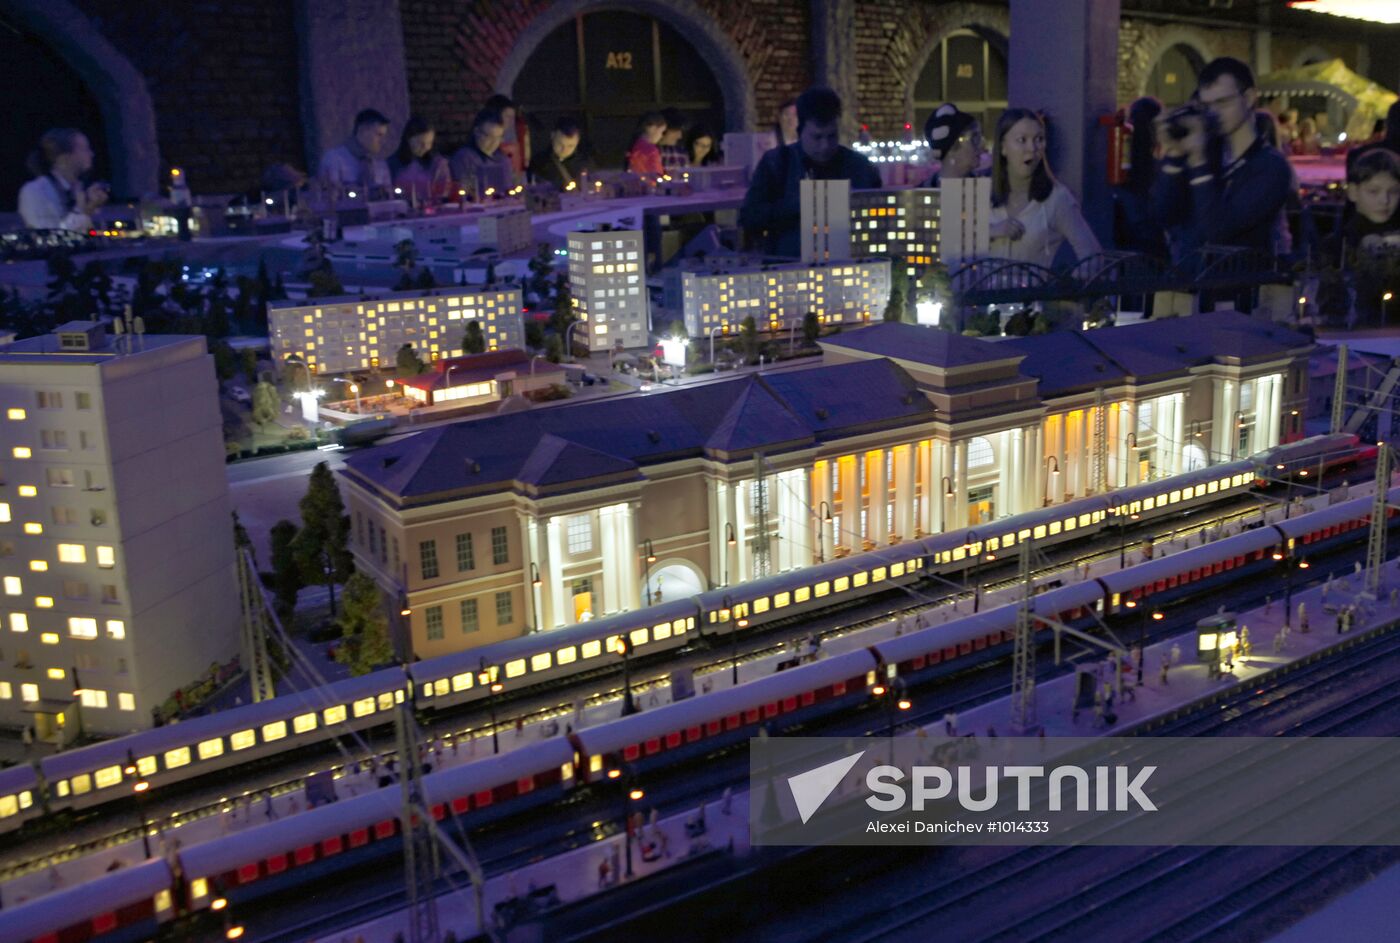 Model of Russia in St Petersburg 80% complete